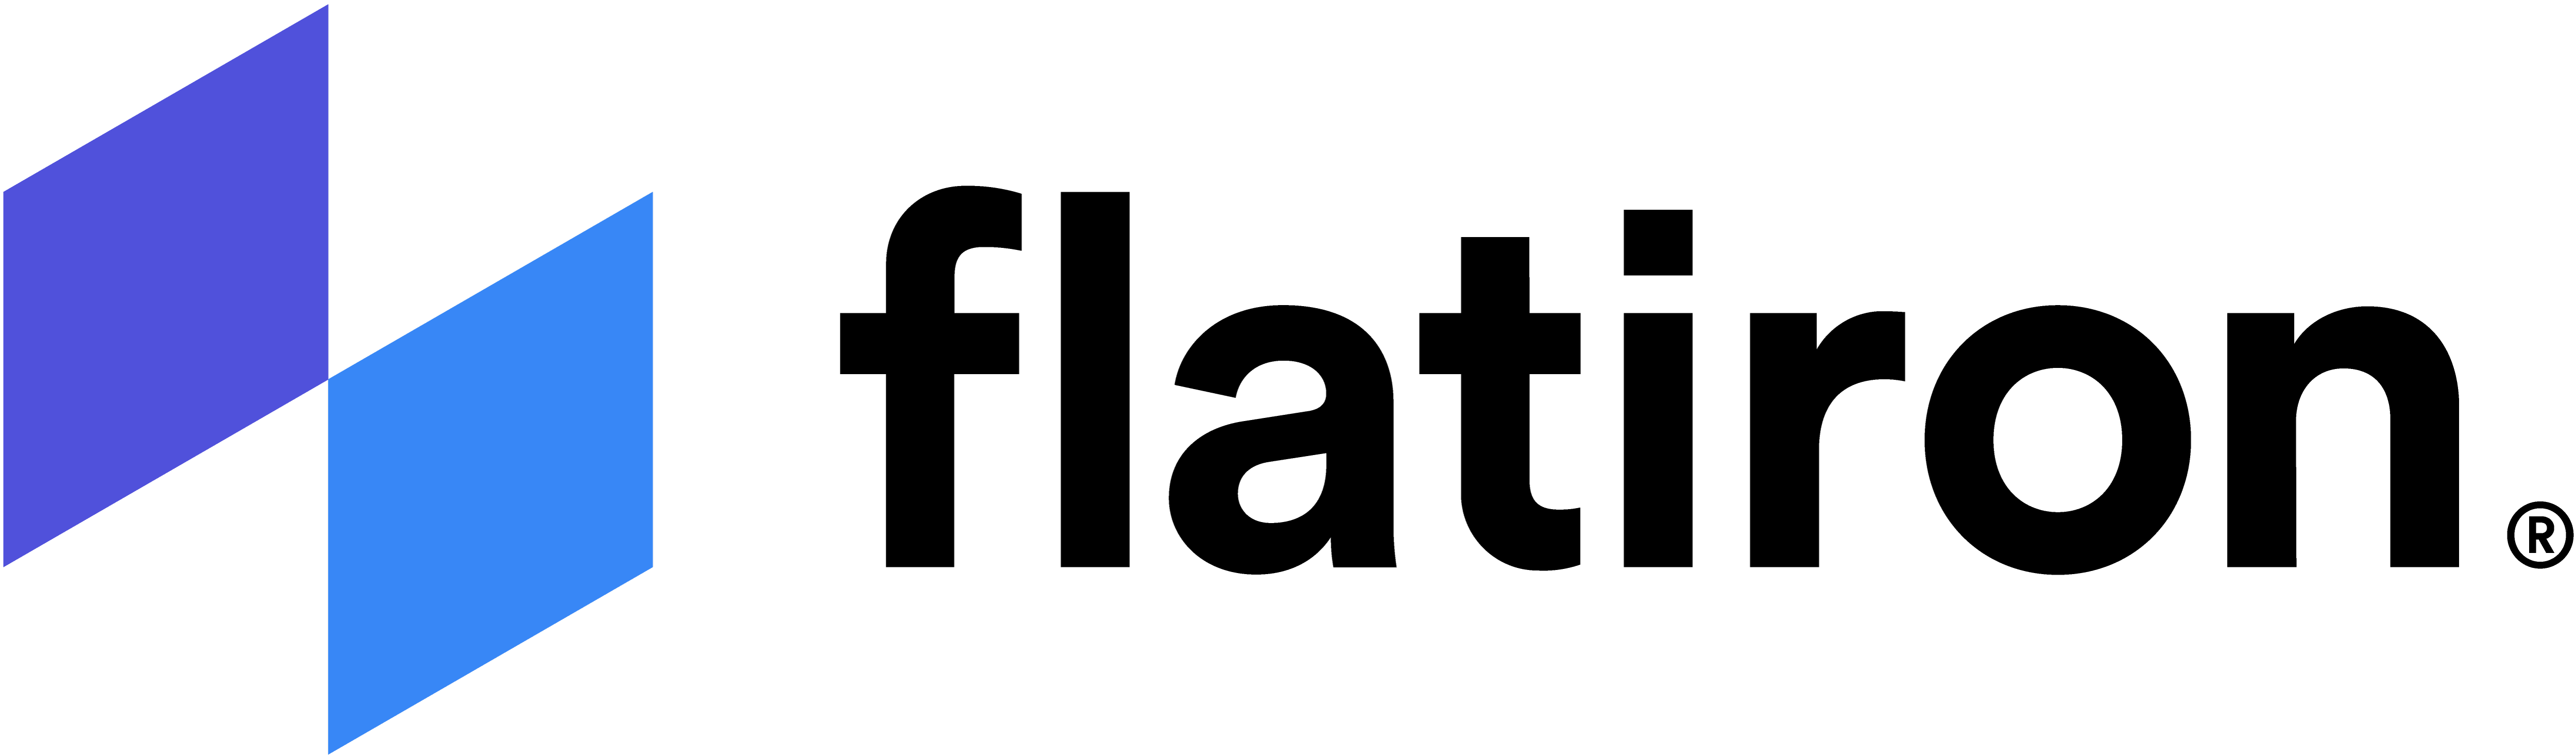 Flatiron Health logo